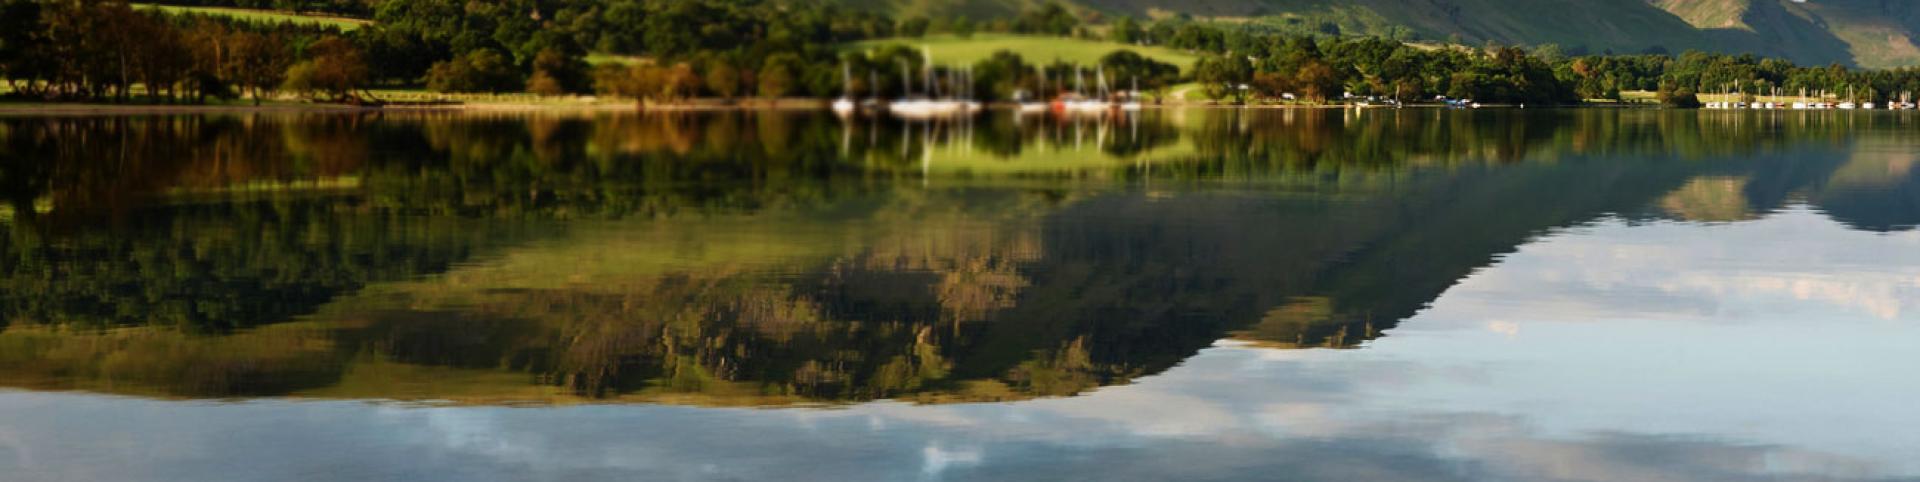 Mountains reflecting on a glassy lake